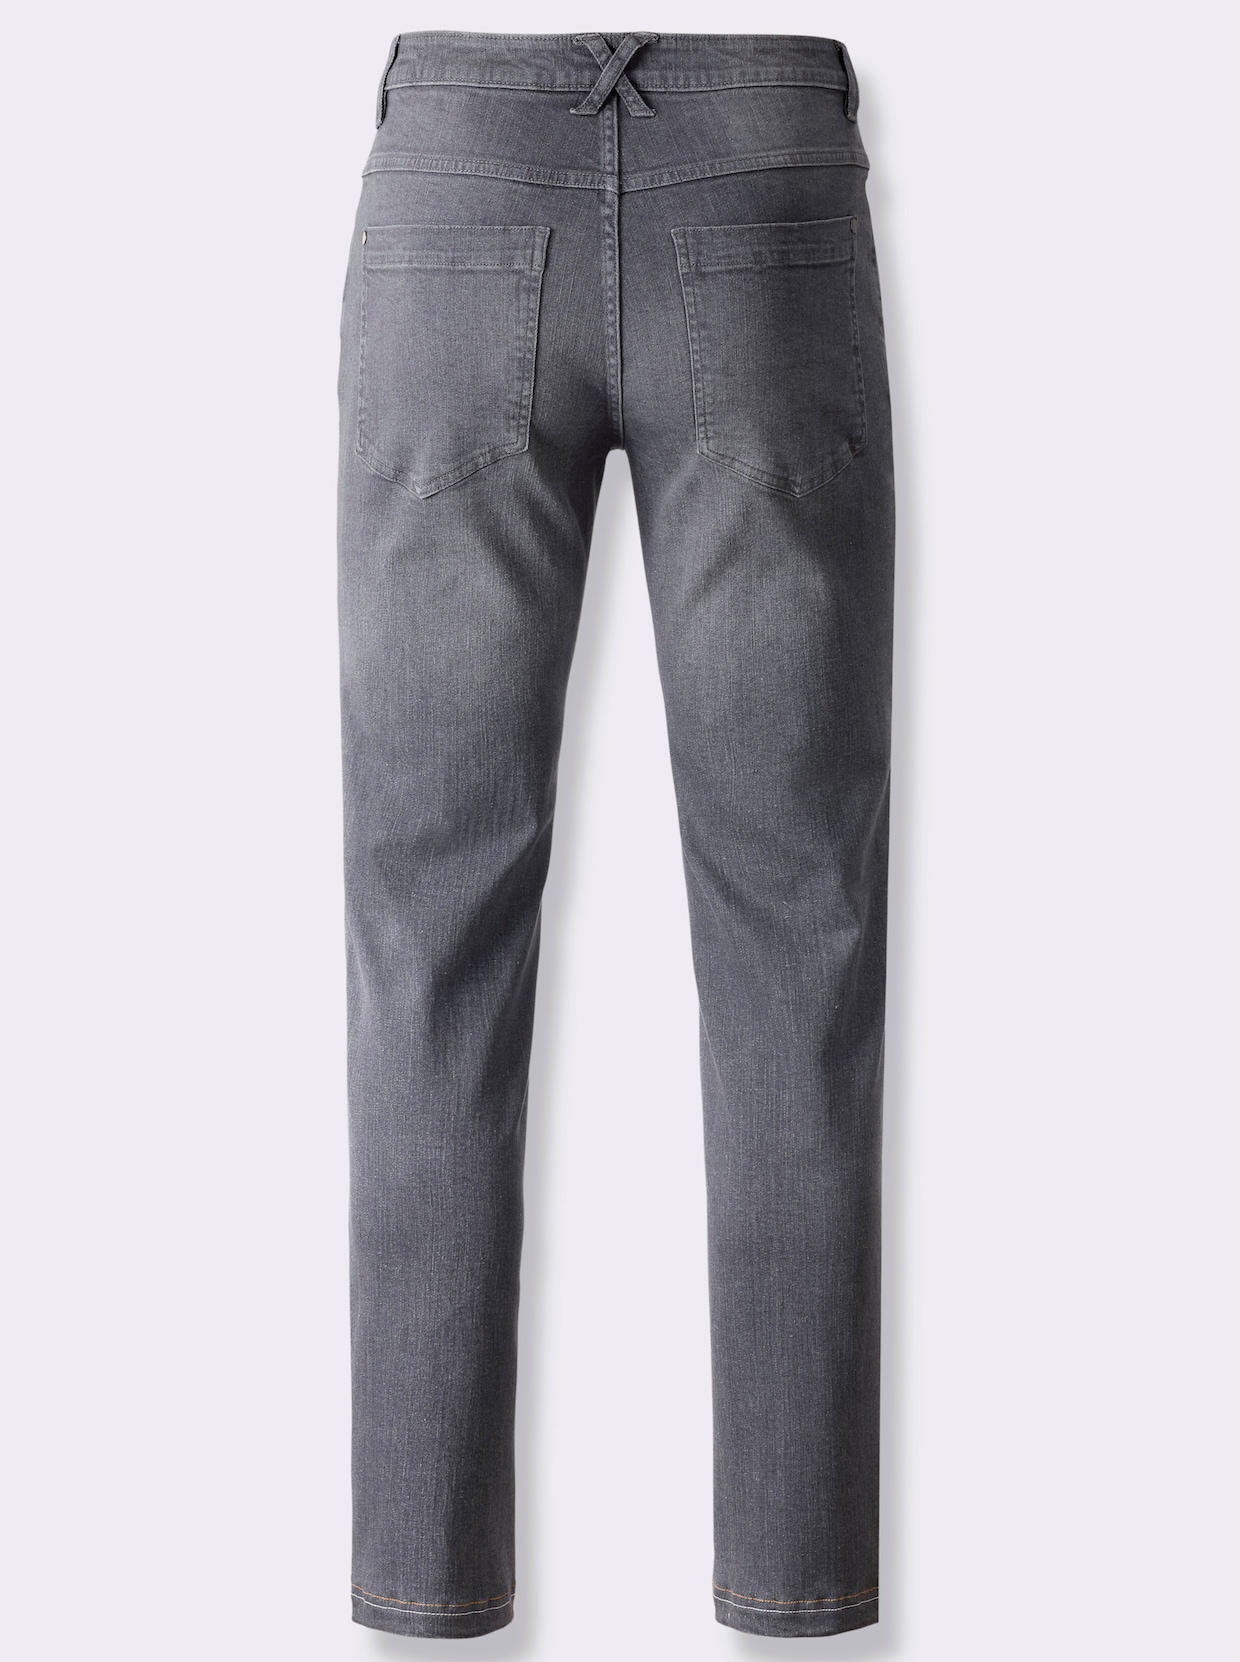 Marco Donati Jeans - grey denim